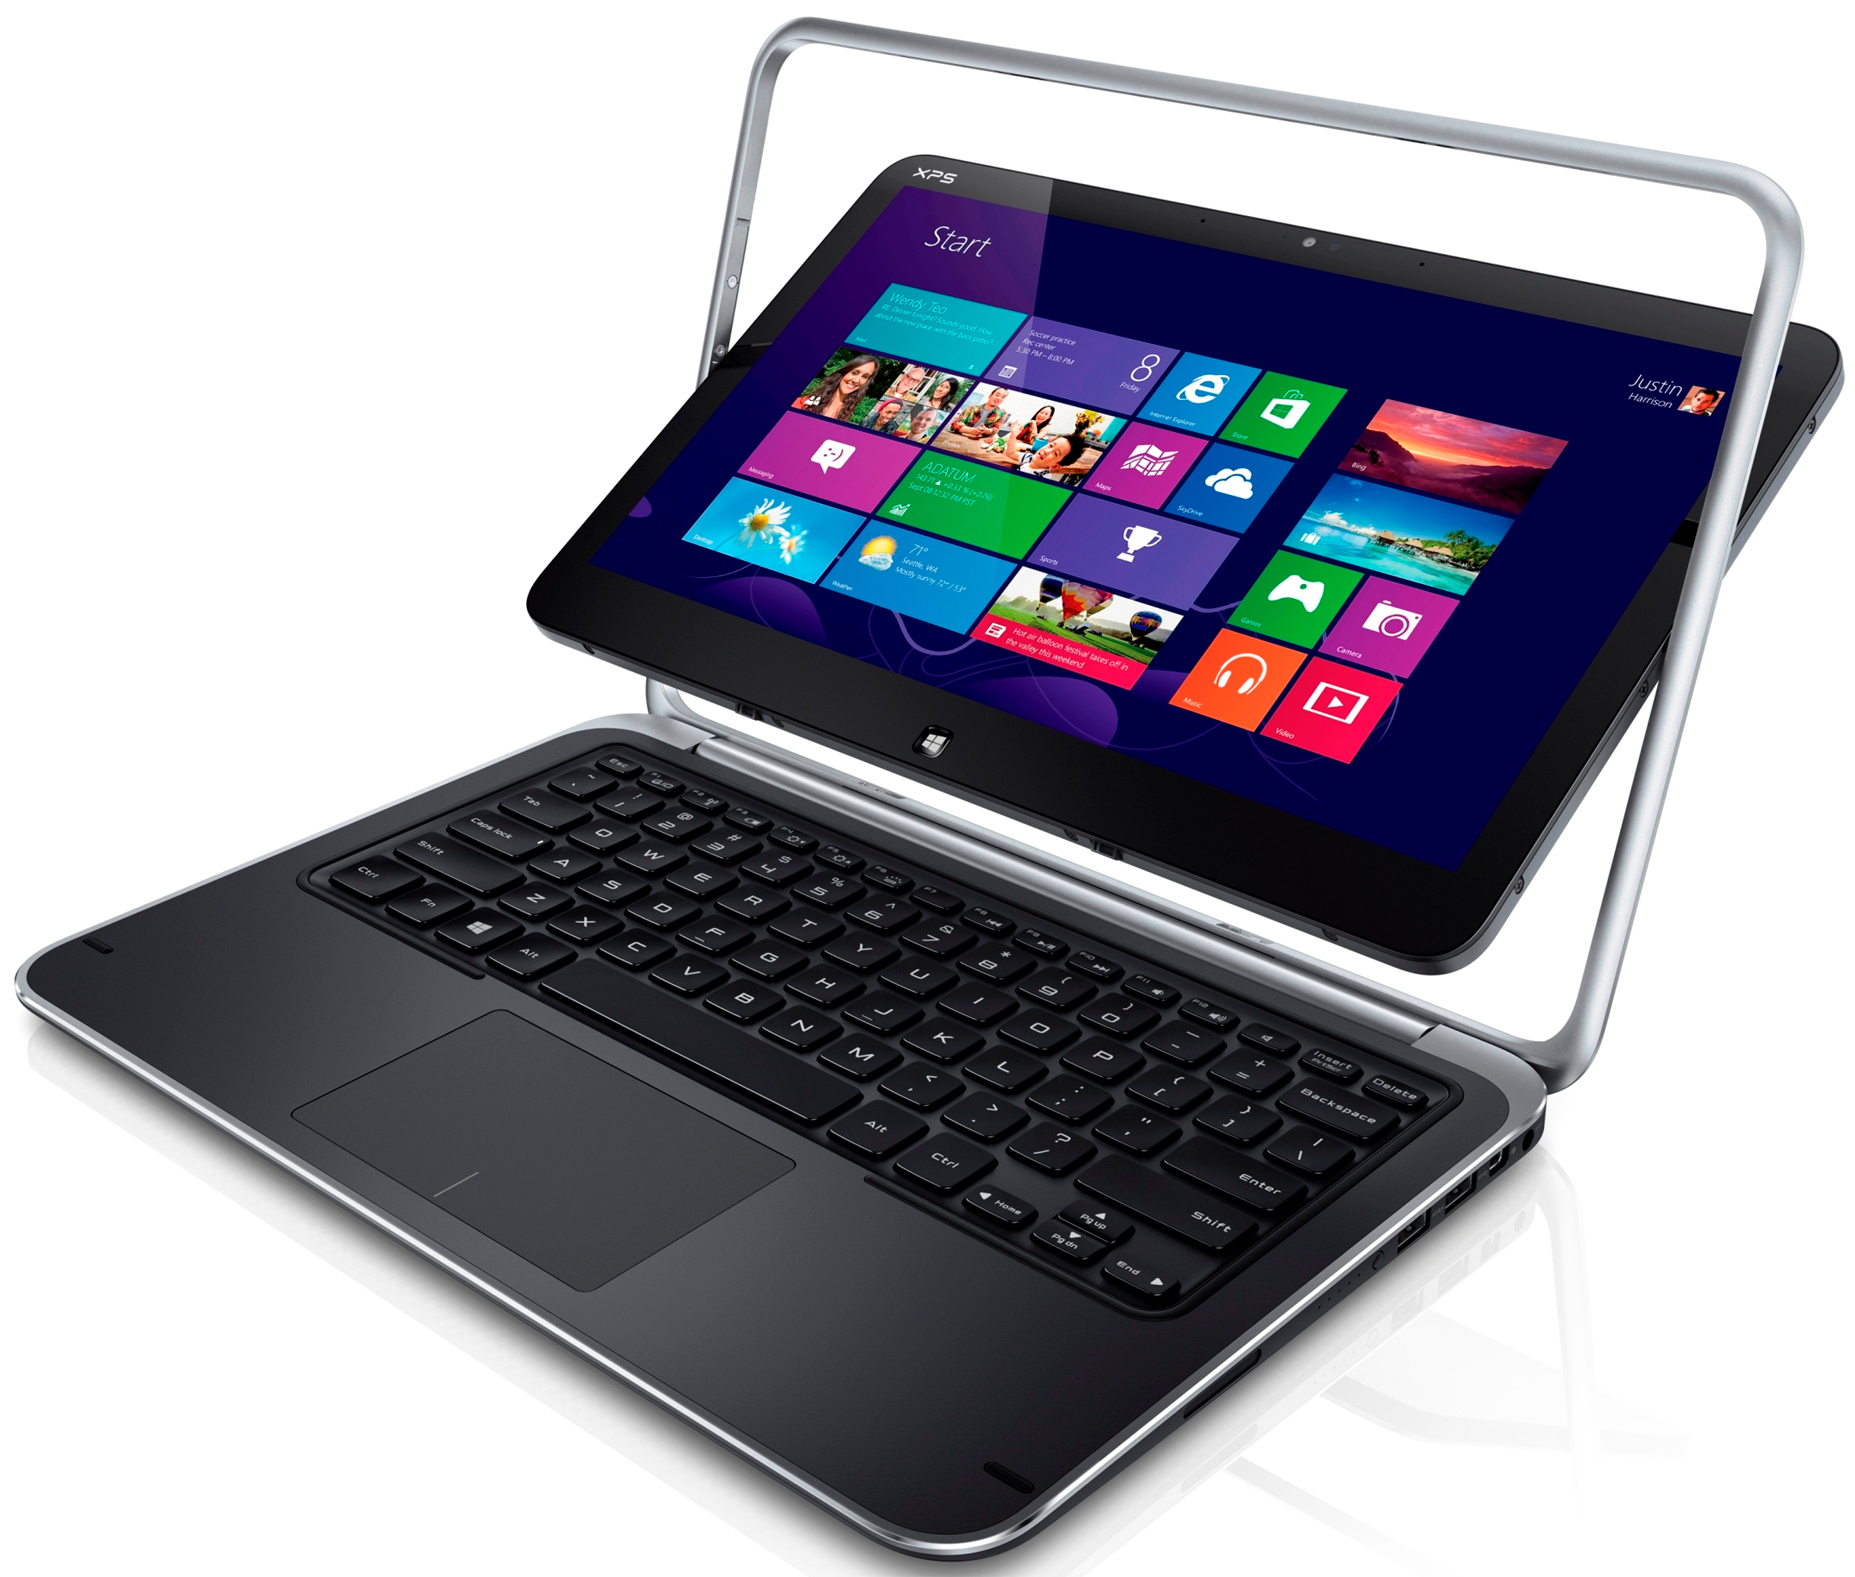 Harga DELL: Dell New XPS 12 Ultrabook Core i5 128GB Window 8